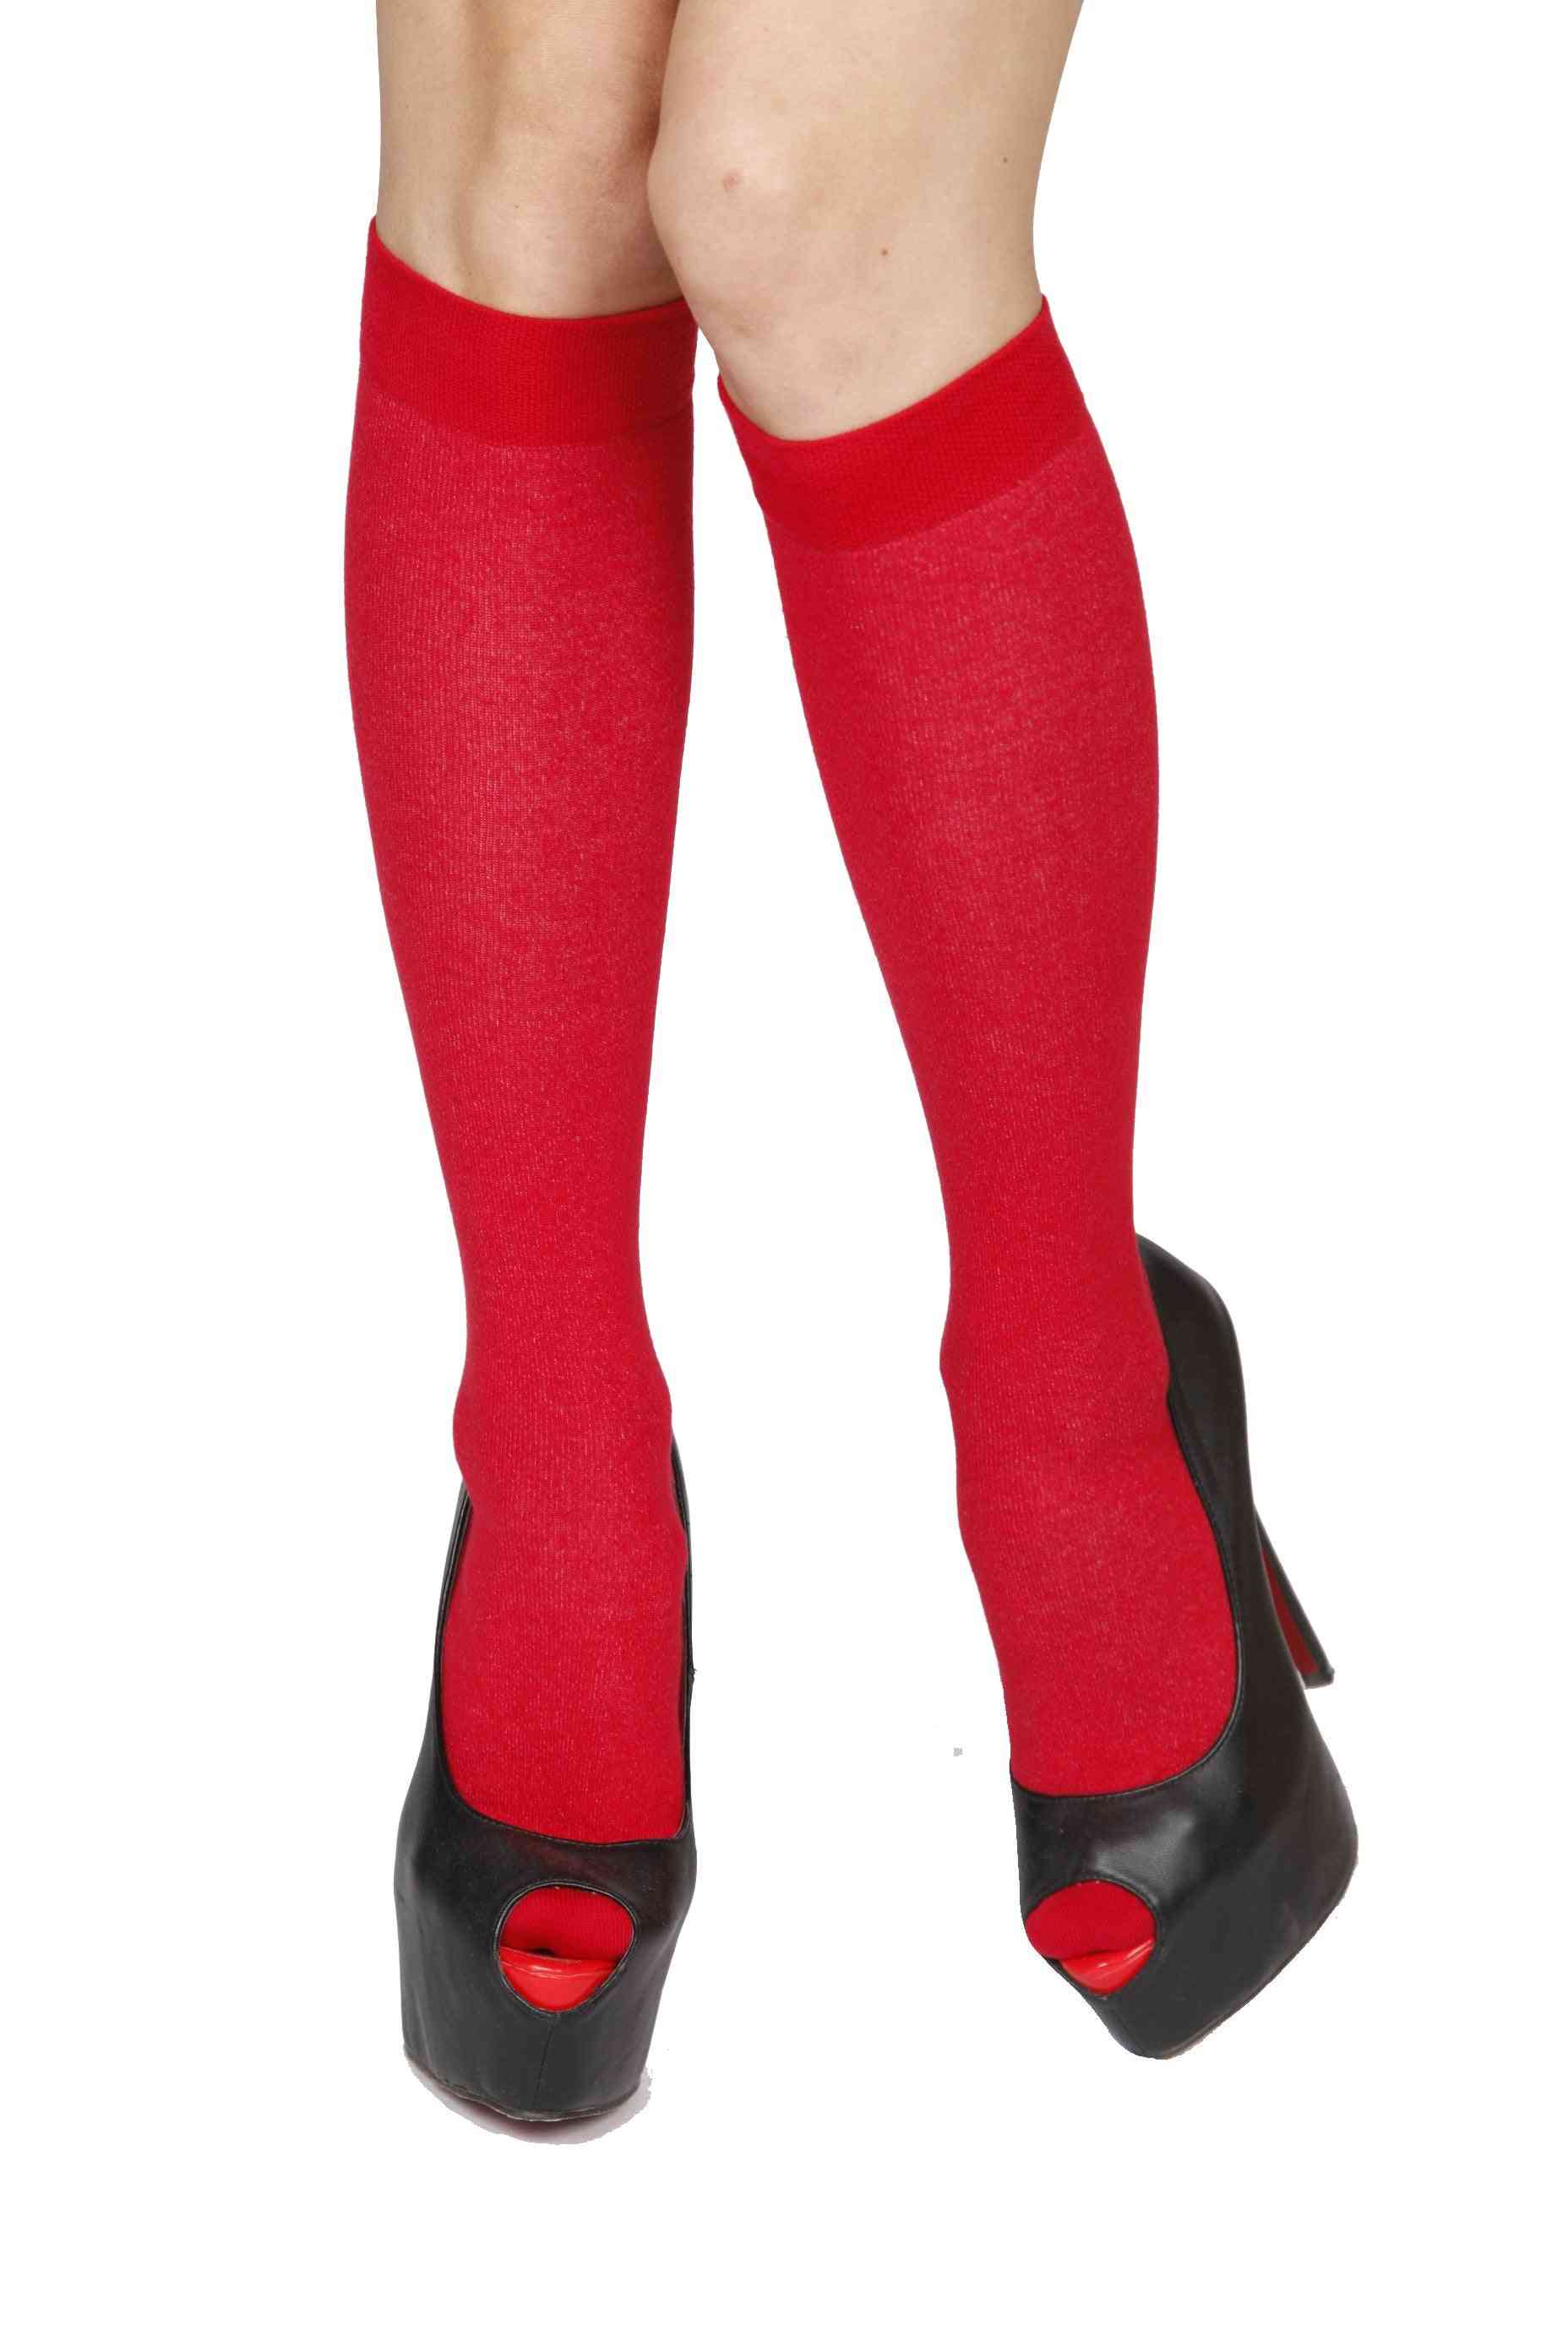 Red Cotton- Knee Highs, Folk Dance Skirts & Trousers Socks